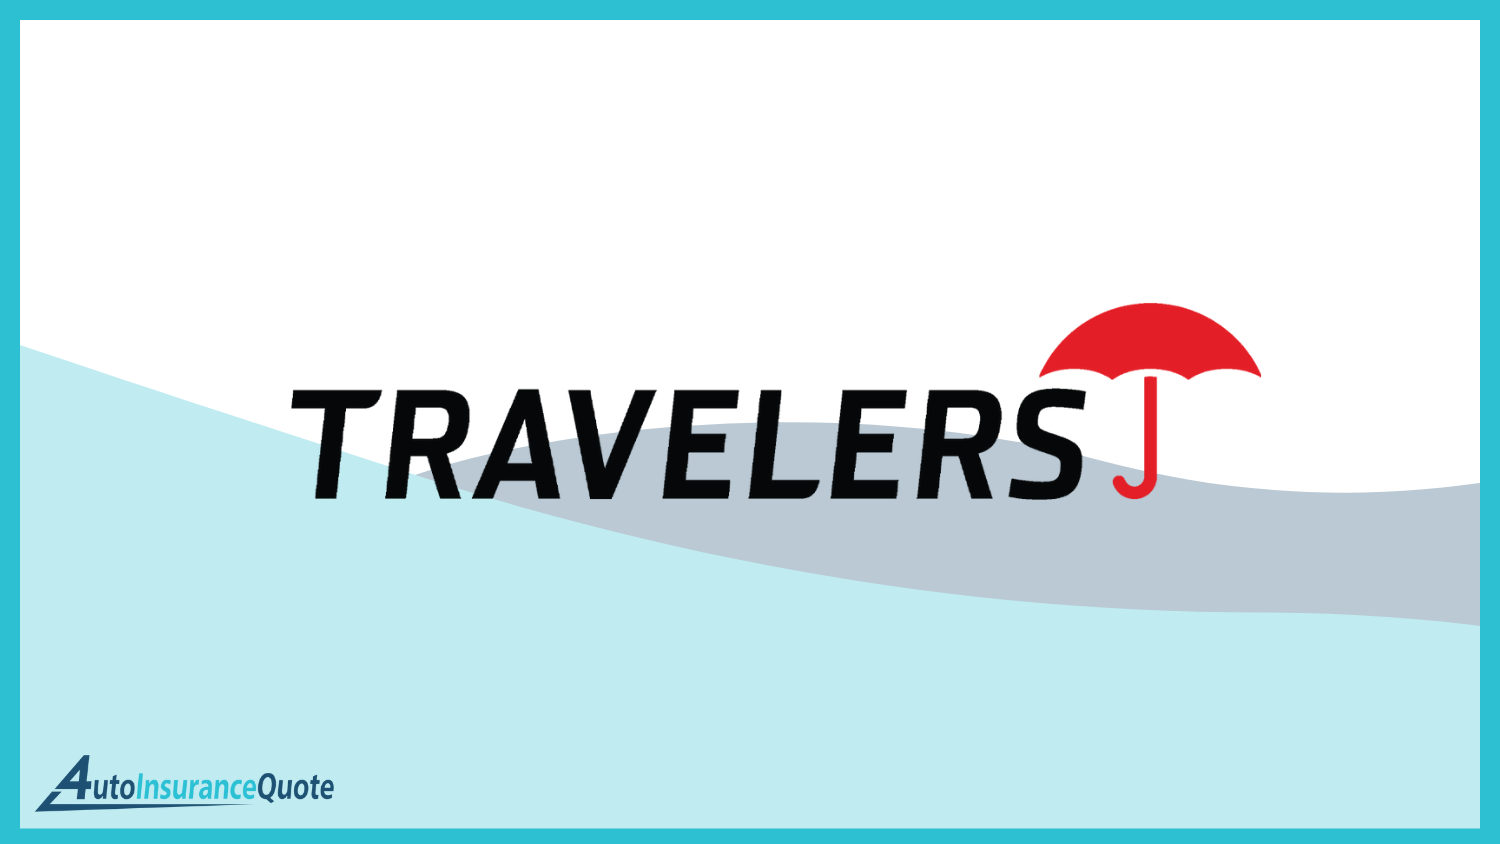 Travelers: Best Auto Insurance Companies for Seniors